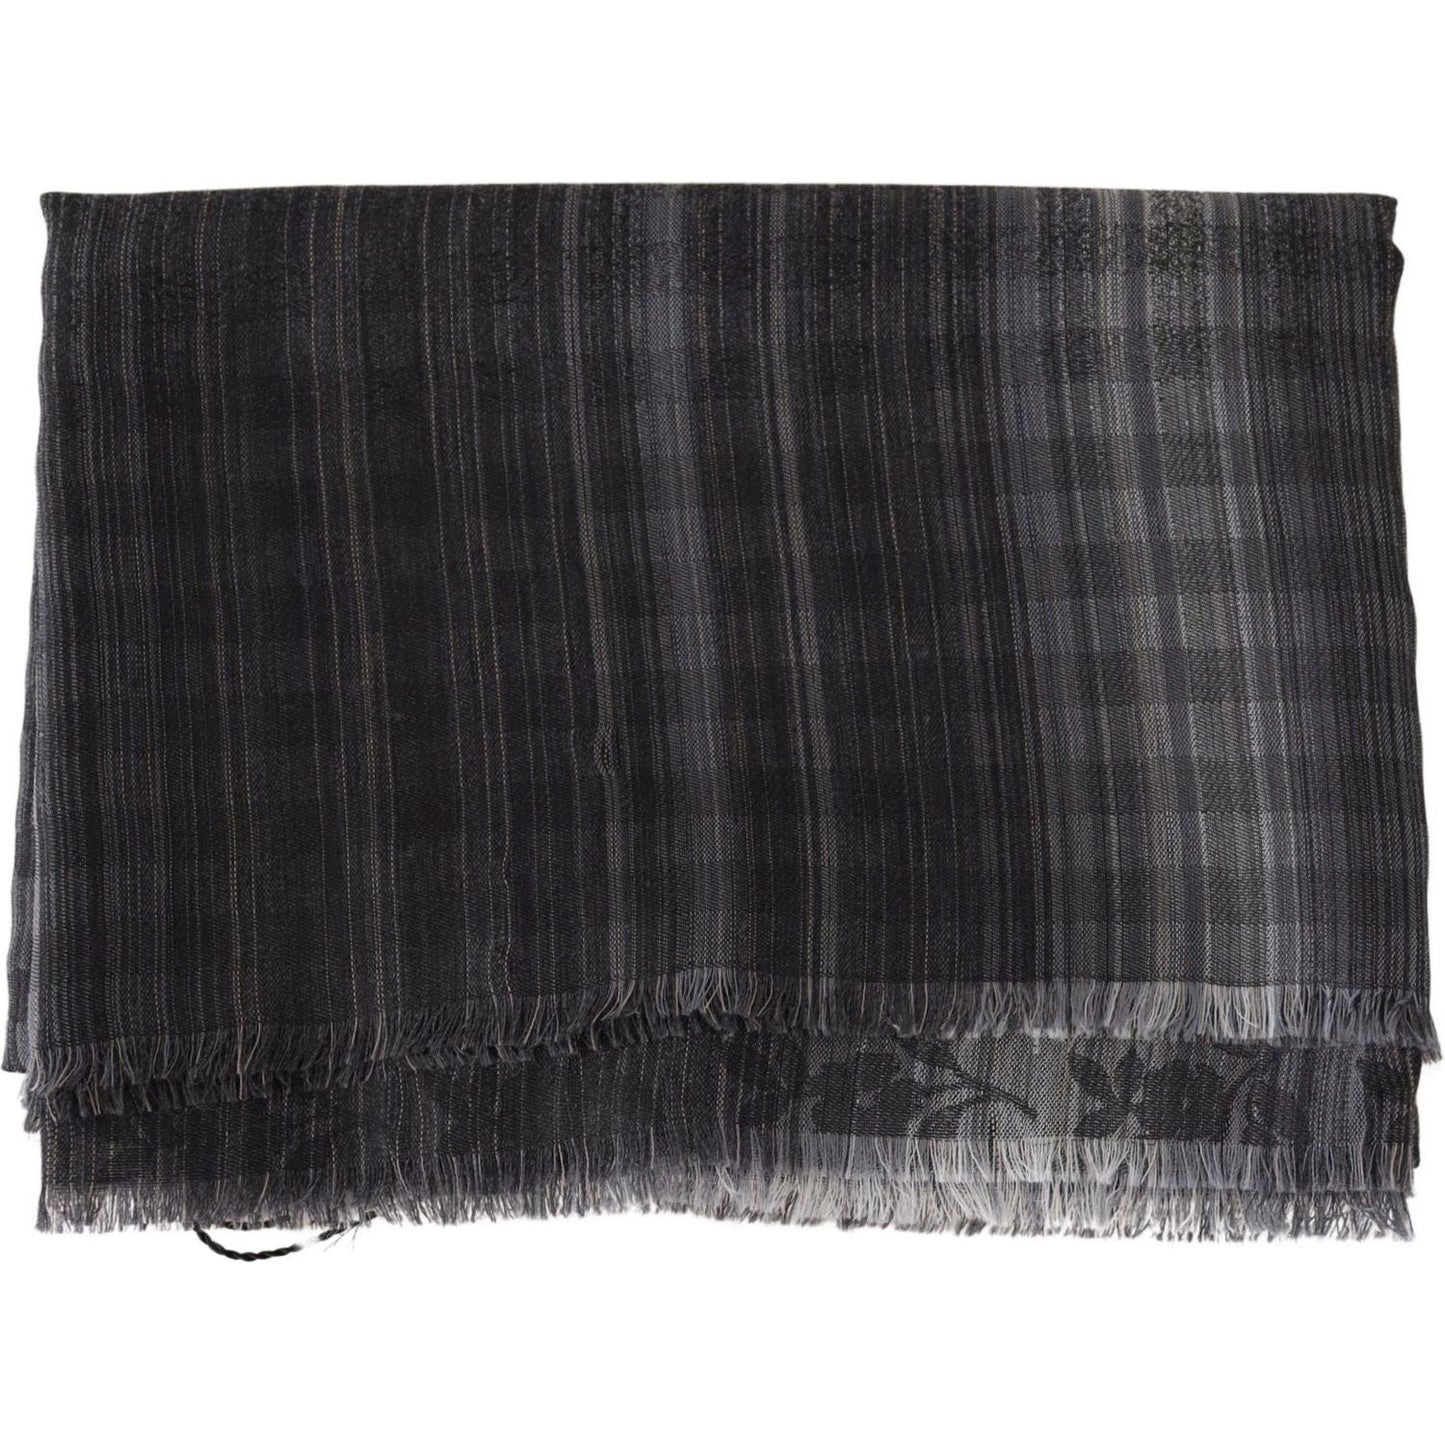 Missoni Elegant Wool Silk Polka Dot Scarf black-gray-polka-dot-wool-unisex-neck-wrap-scarf